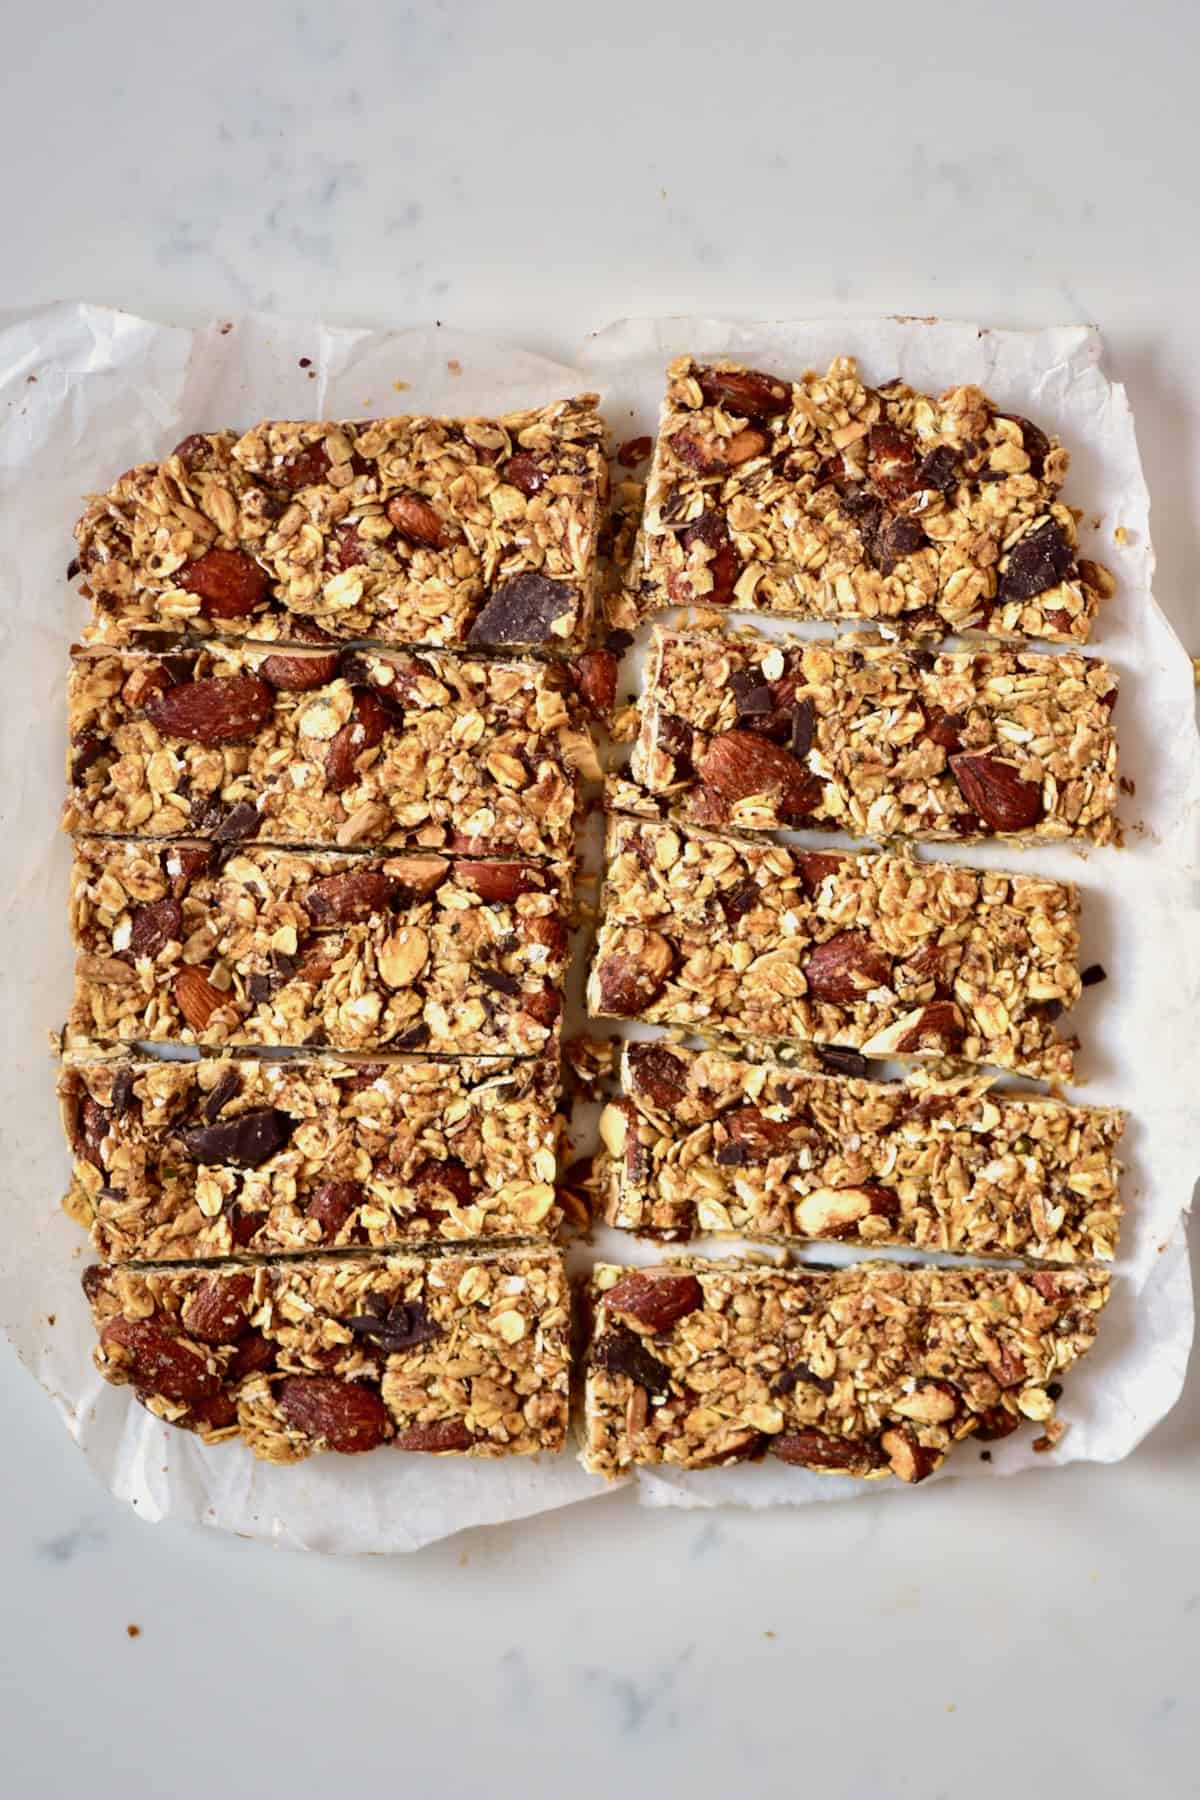 Homemade granola bars on a flat surface